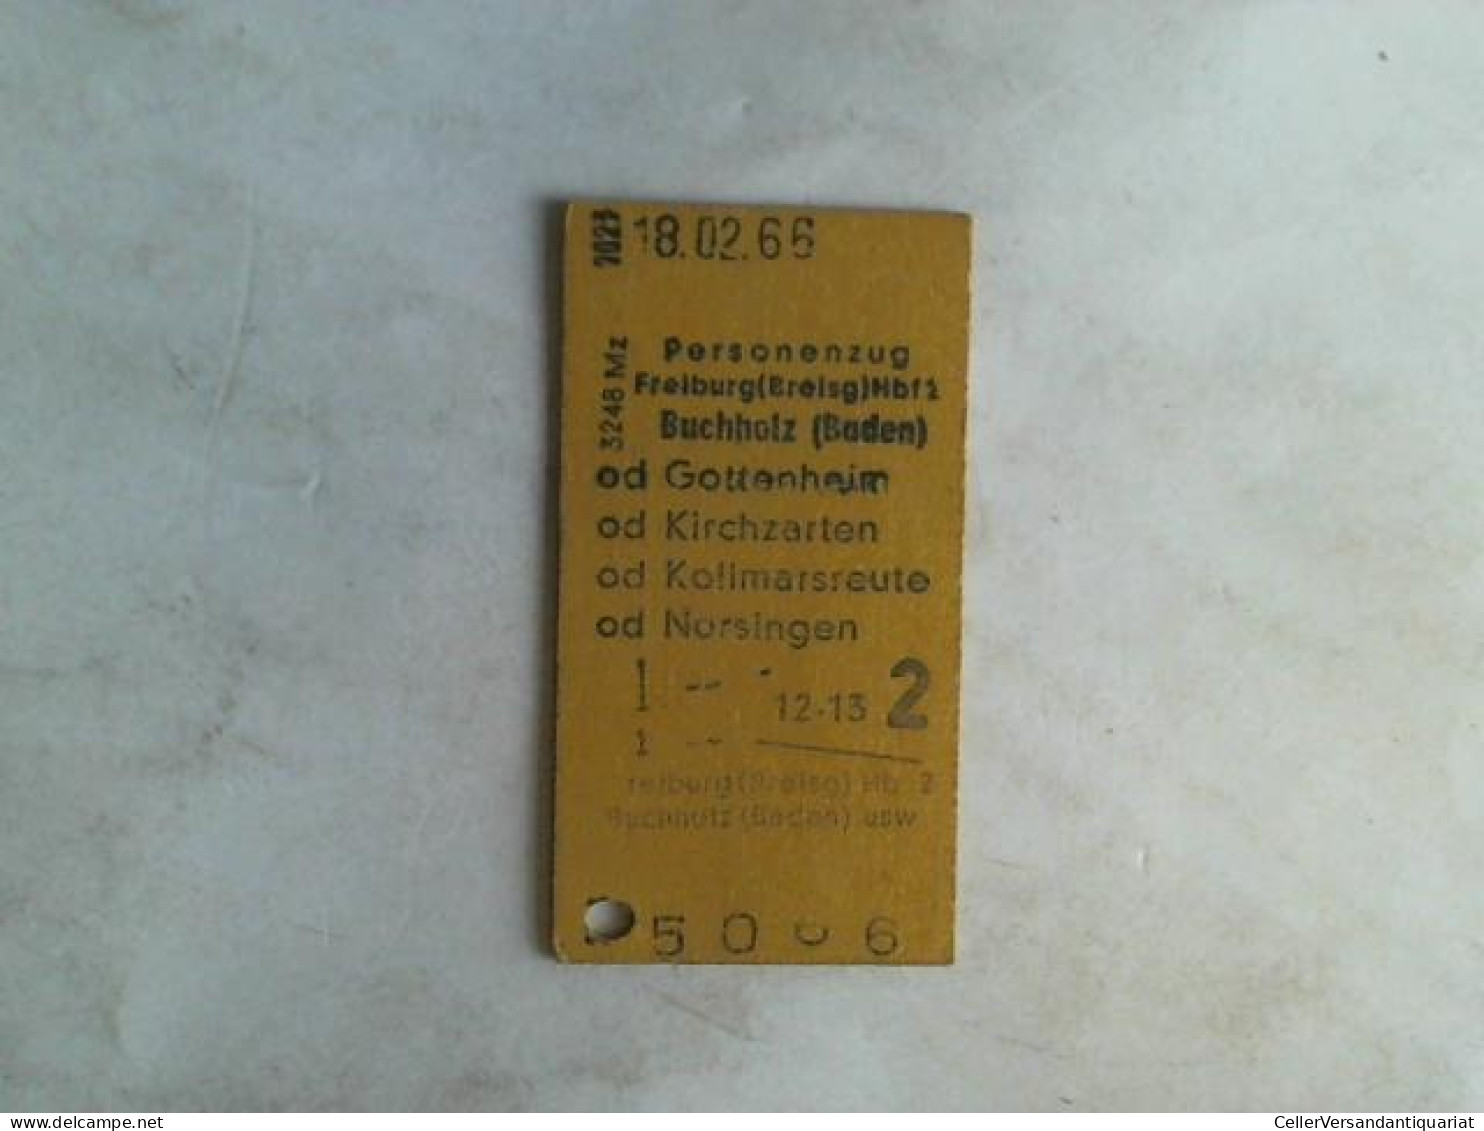 Fahrkarte Personenzug Freiburg (Breisg) Hbf 1 - Buchholz (Baden) Od Gottenheim Od Kirchzarten Od Kollmarsreute Od... - Unclassified